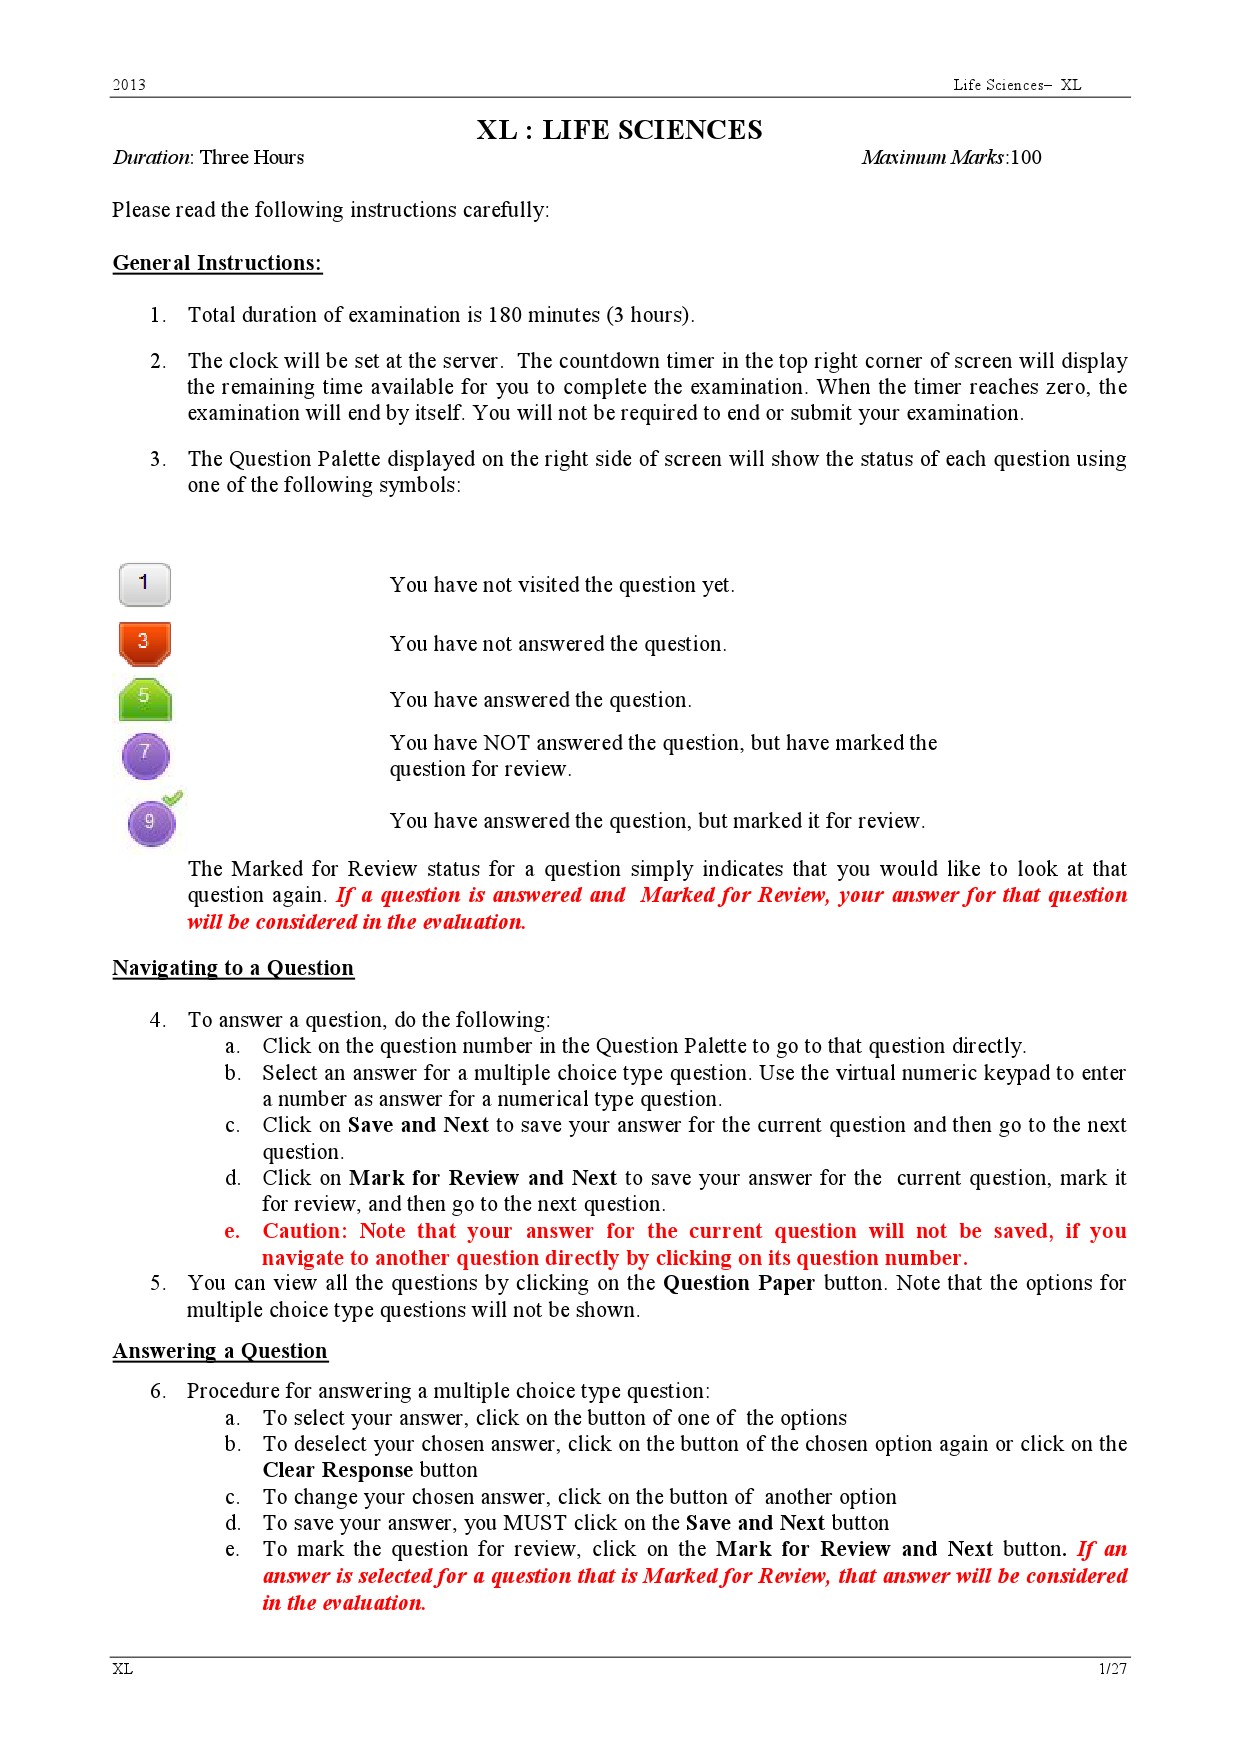 GATE Exam Question Paper 2013 Life Sciences 1